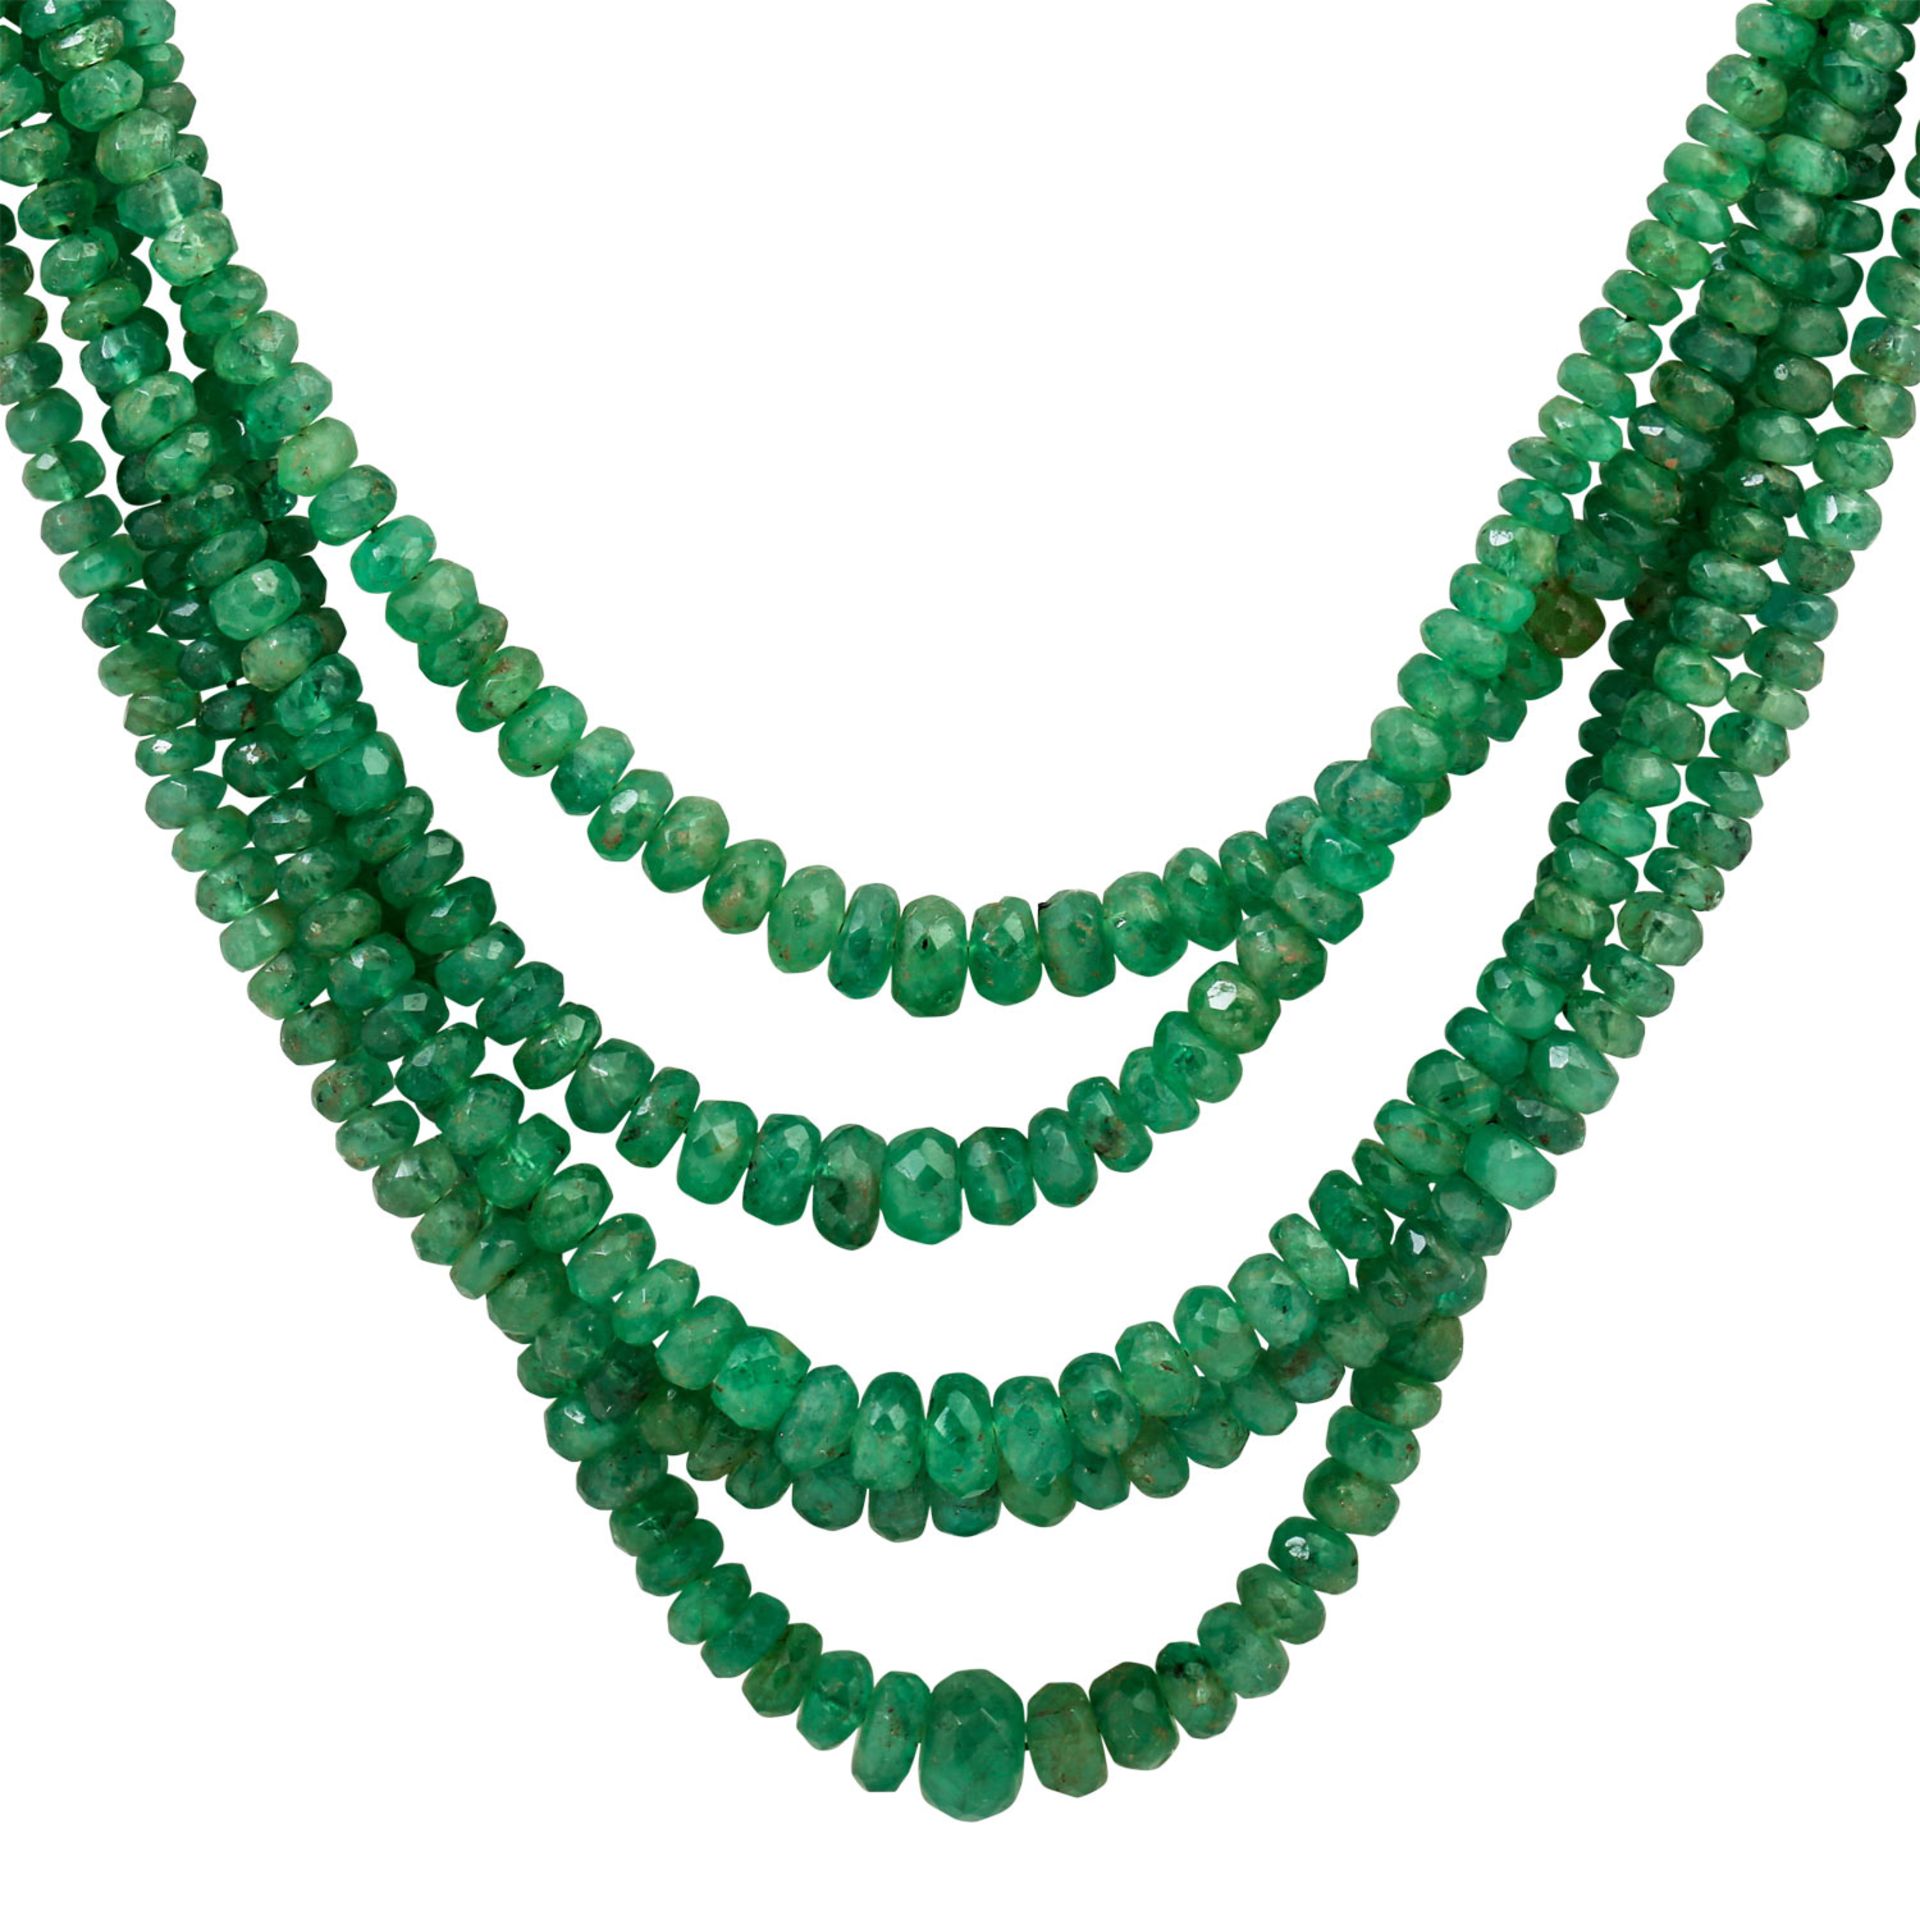 5-reihige Smaragdkette, facettierte Linsen ca. 2,5-6 mm im Verlauf, tansparent bis tra - Image 2 of 5